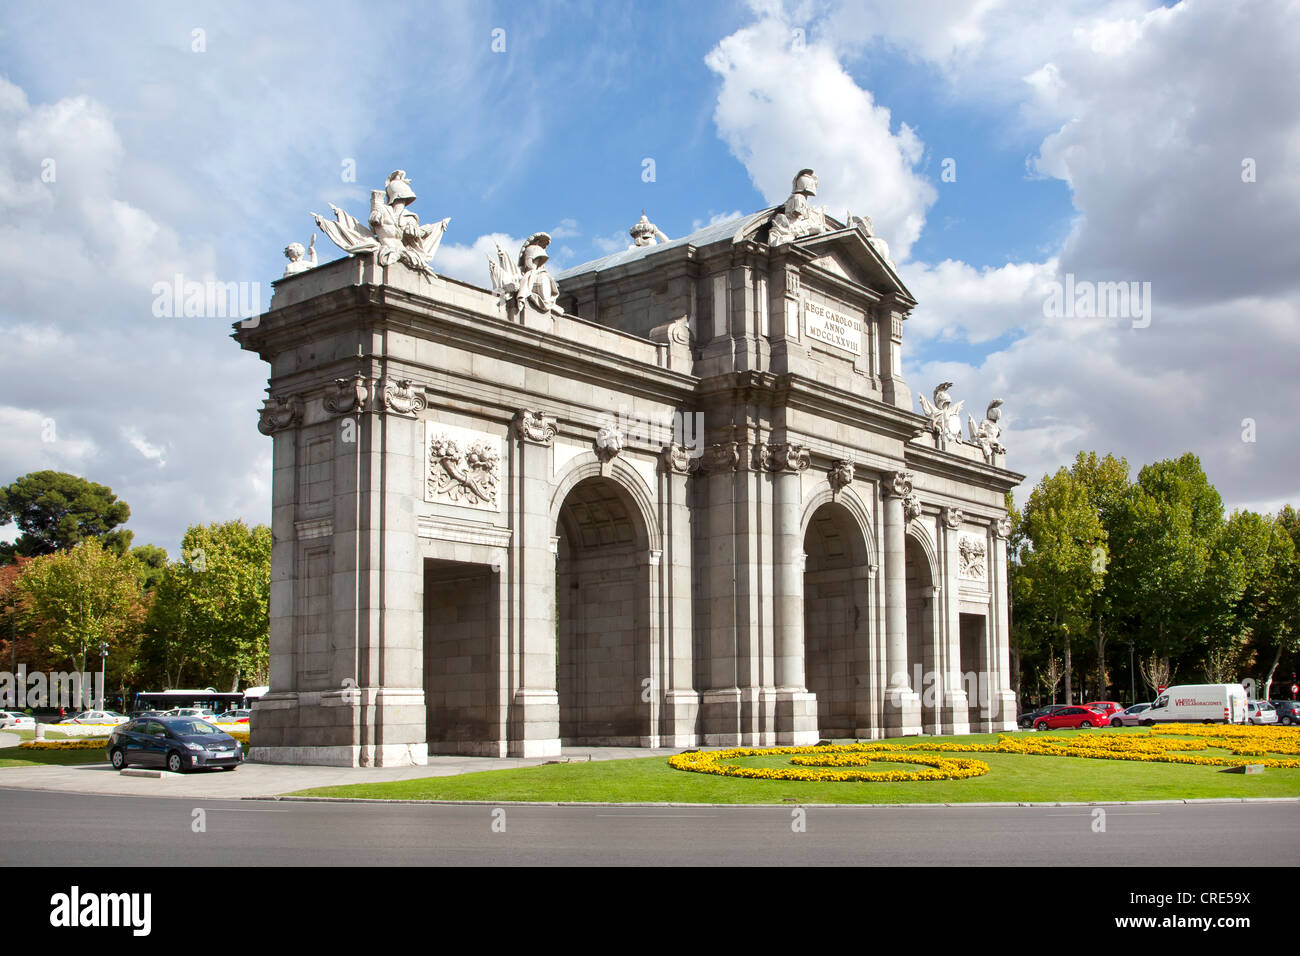 Puerta de Alcala arch on Plaza de la Independencia square, Madrid, Spain, Europe Stock Photo